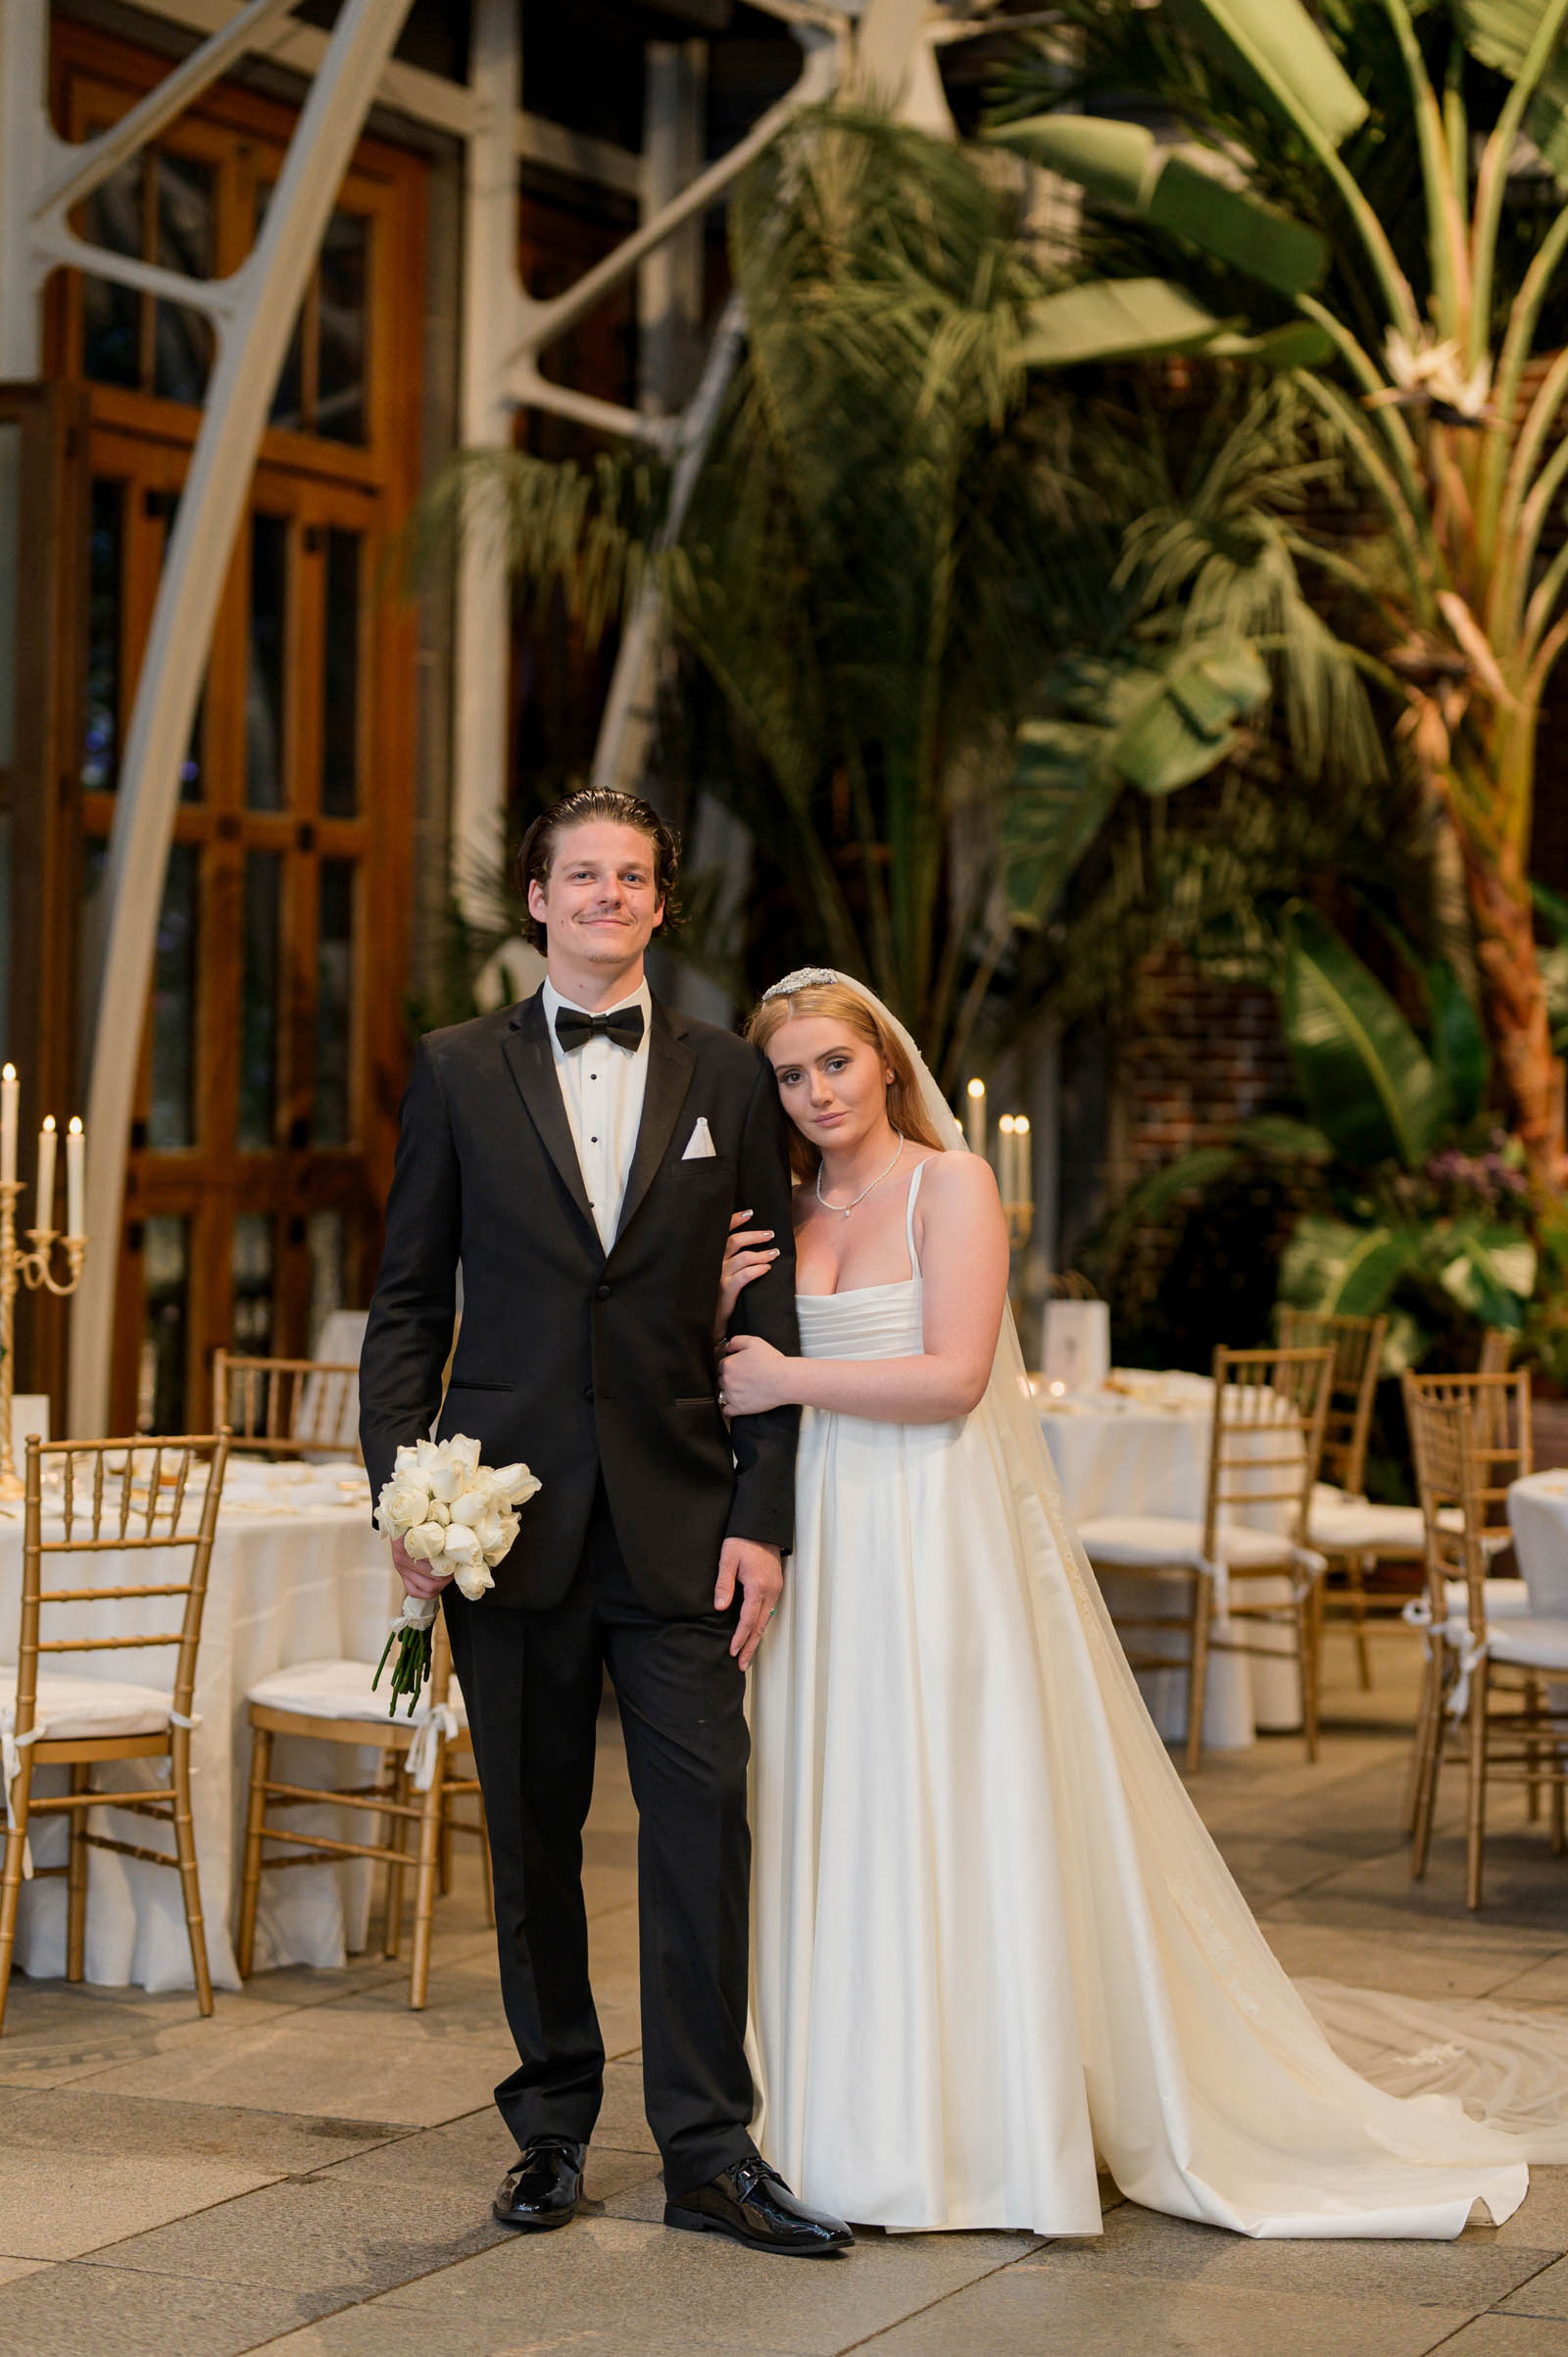 new england botanic garden wedding at tower hill reception couples portraits